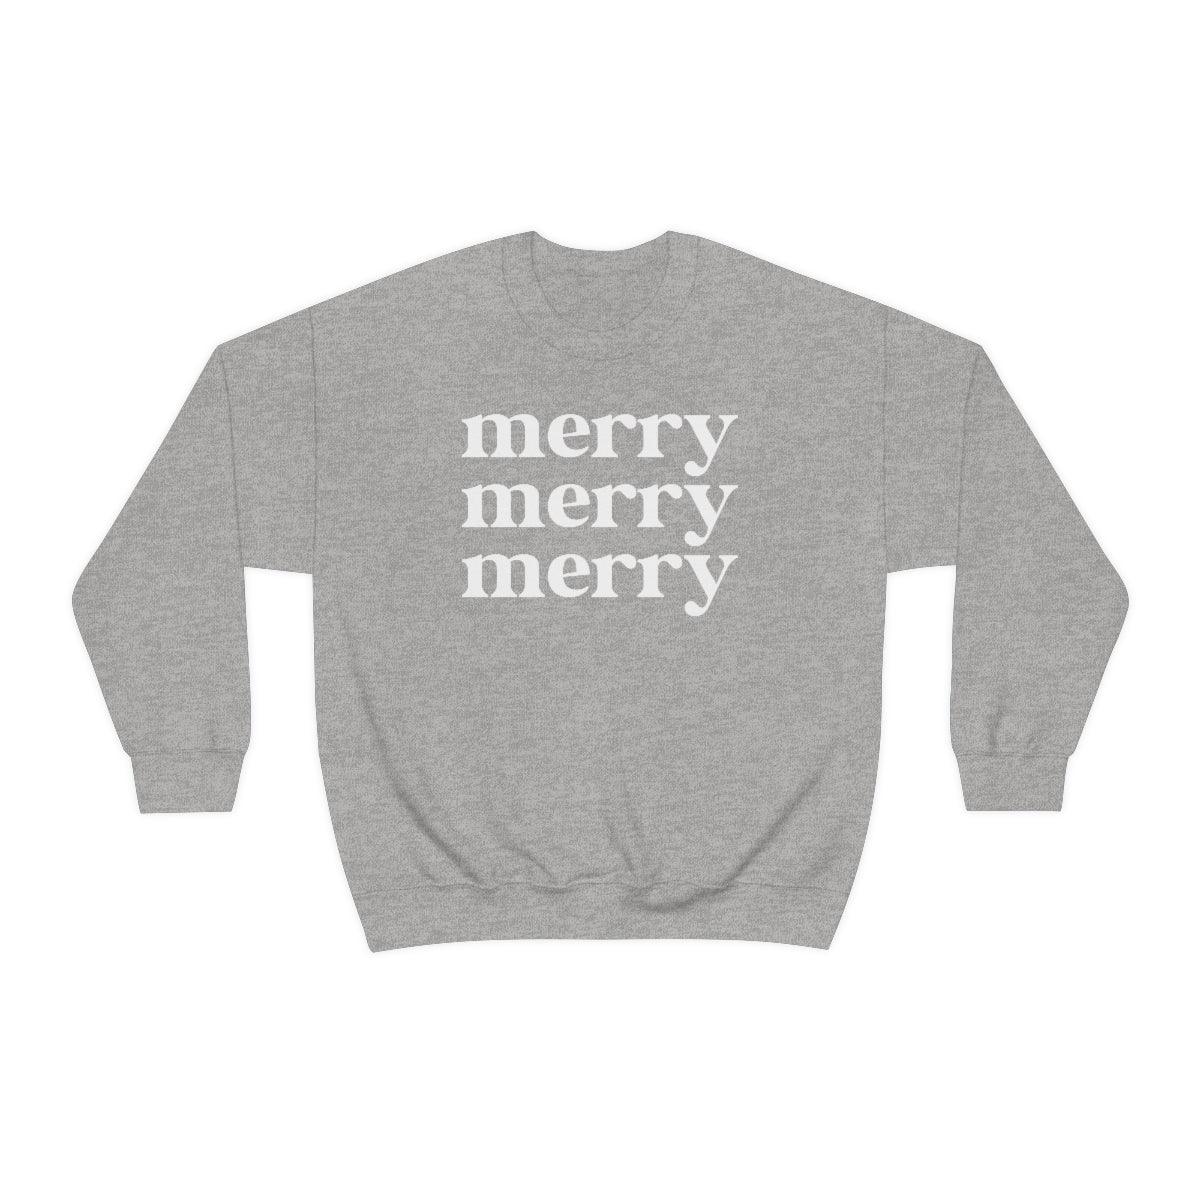 Merry Merry Merry Christmas Crewneck Sweater